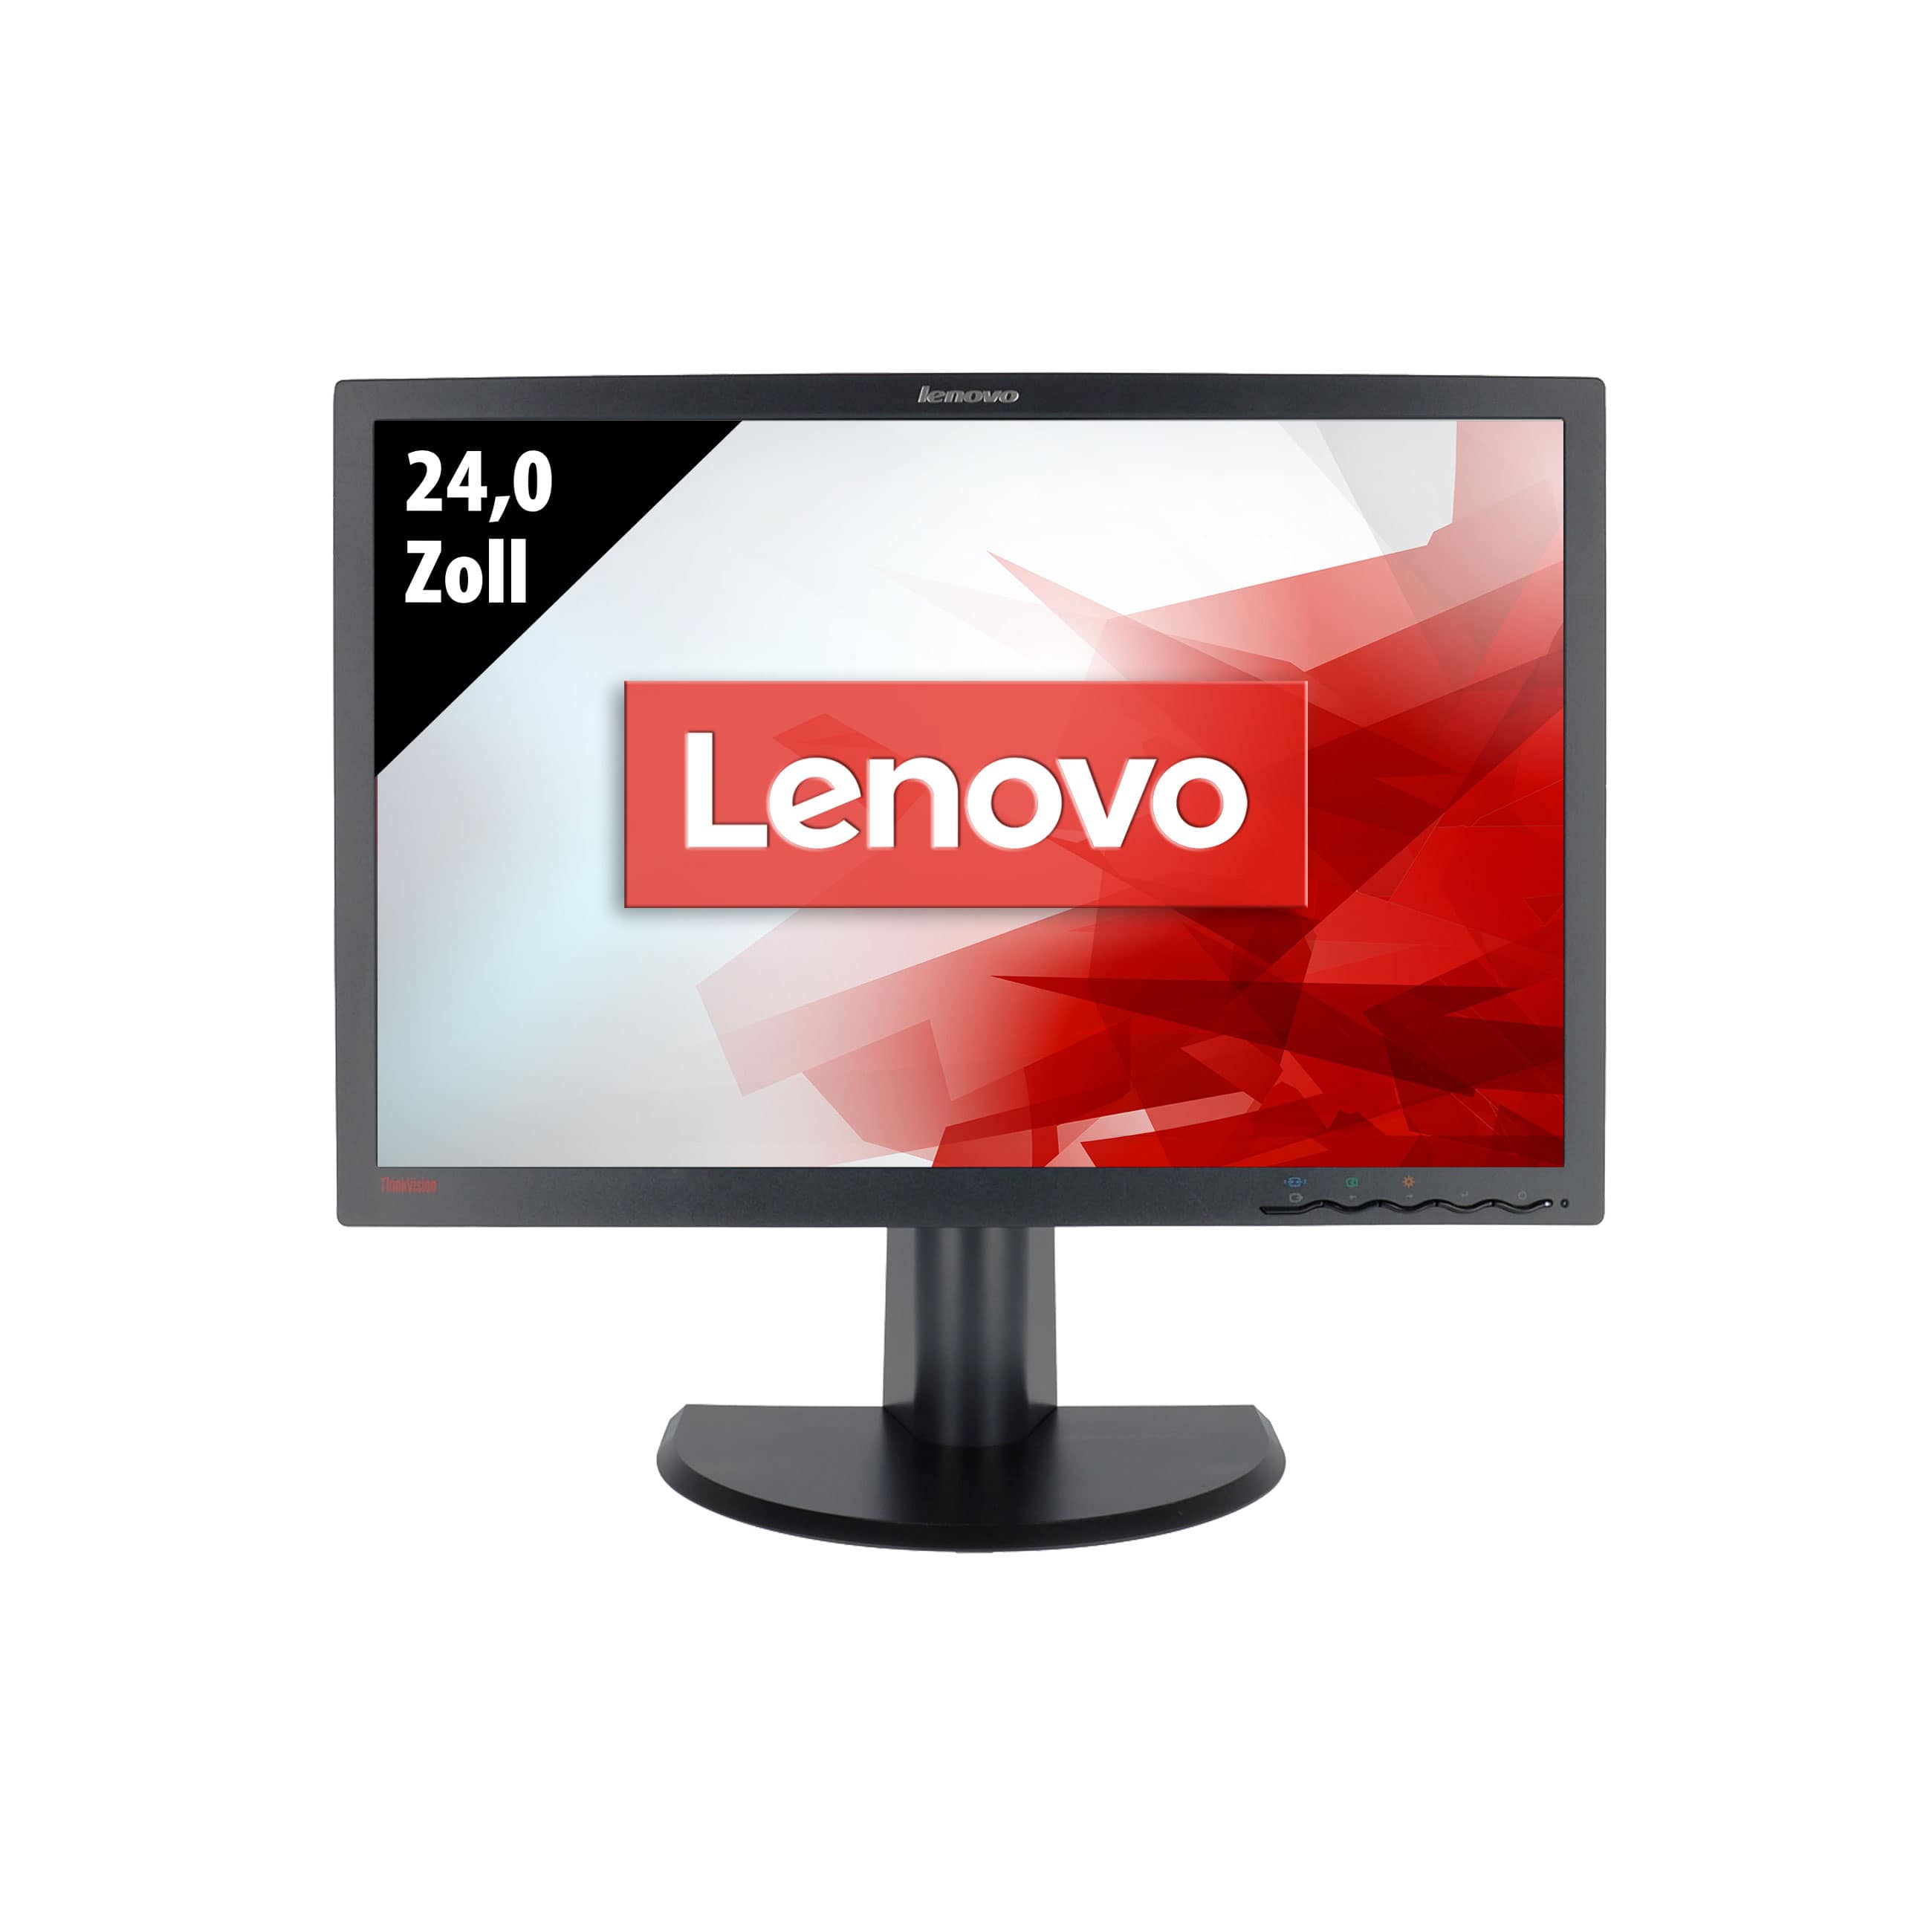 Lenovo ThinkVision LT2452p - 1920 x 1200 - WUXGA - 24,0 Zoll - 7 ms - Schwarz